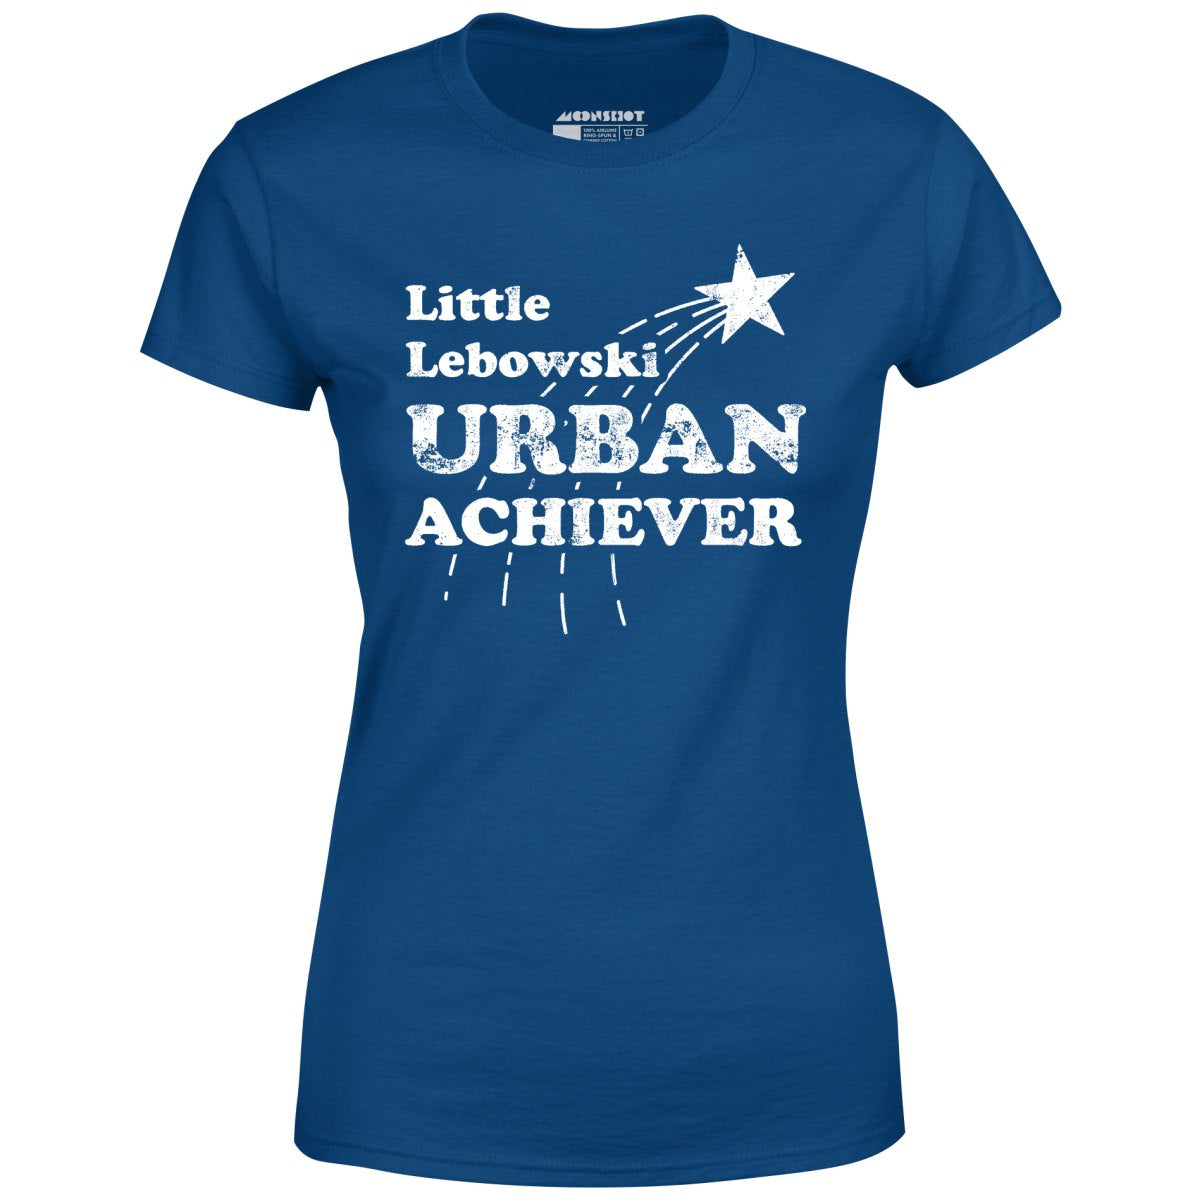 Little Lebowski Urban Achiever - Women's T-Shirt